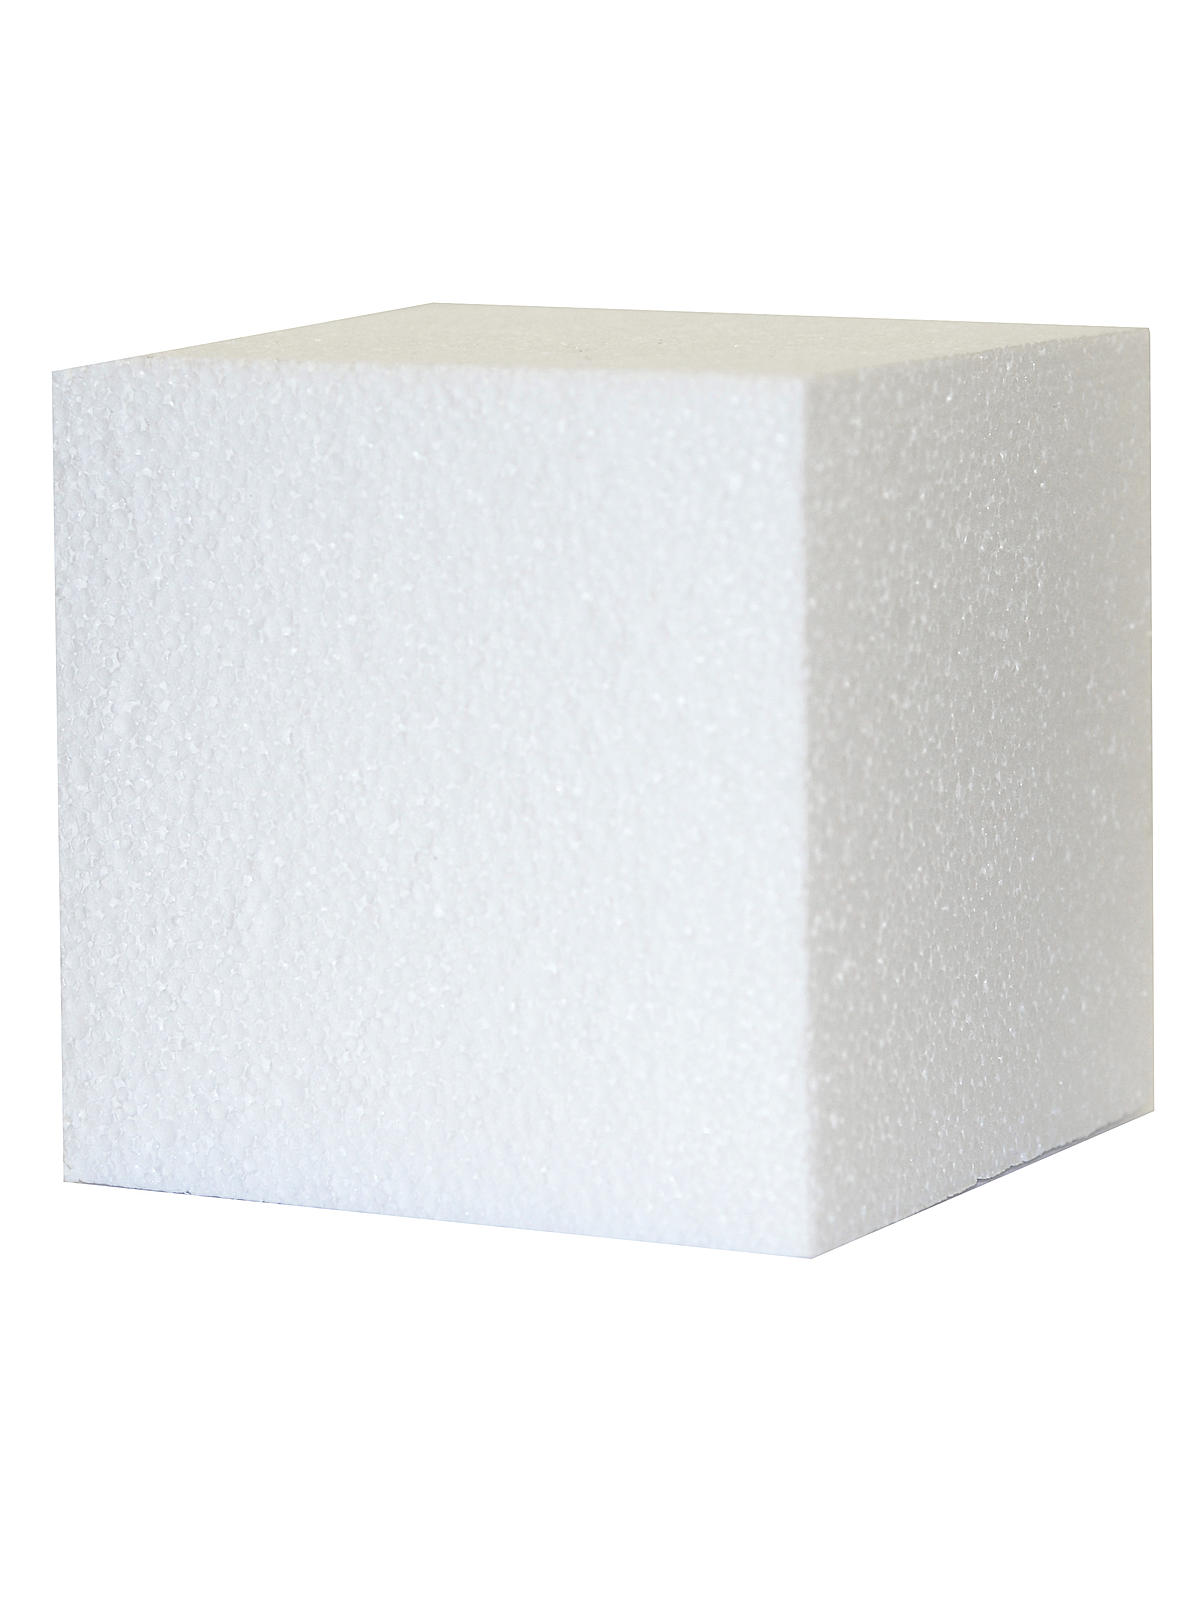 Craft Foam Shapes Cube 4 In. Each